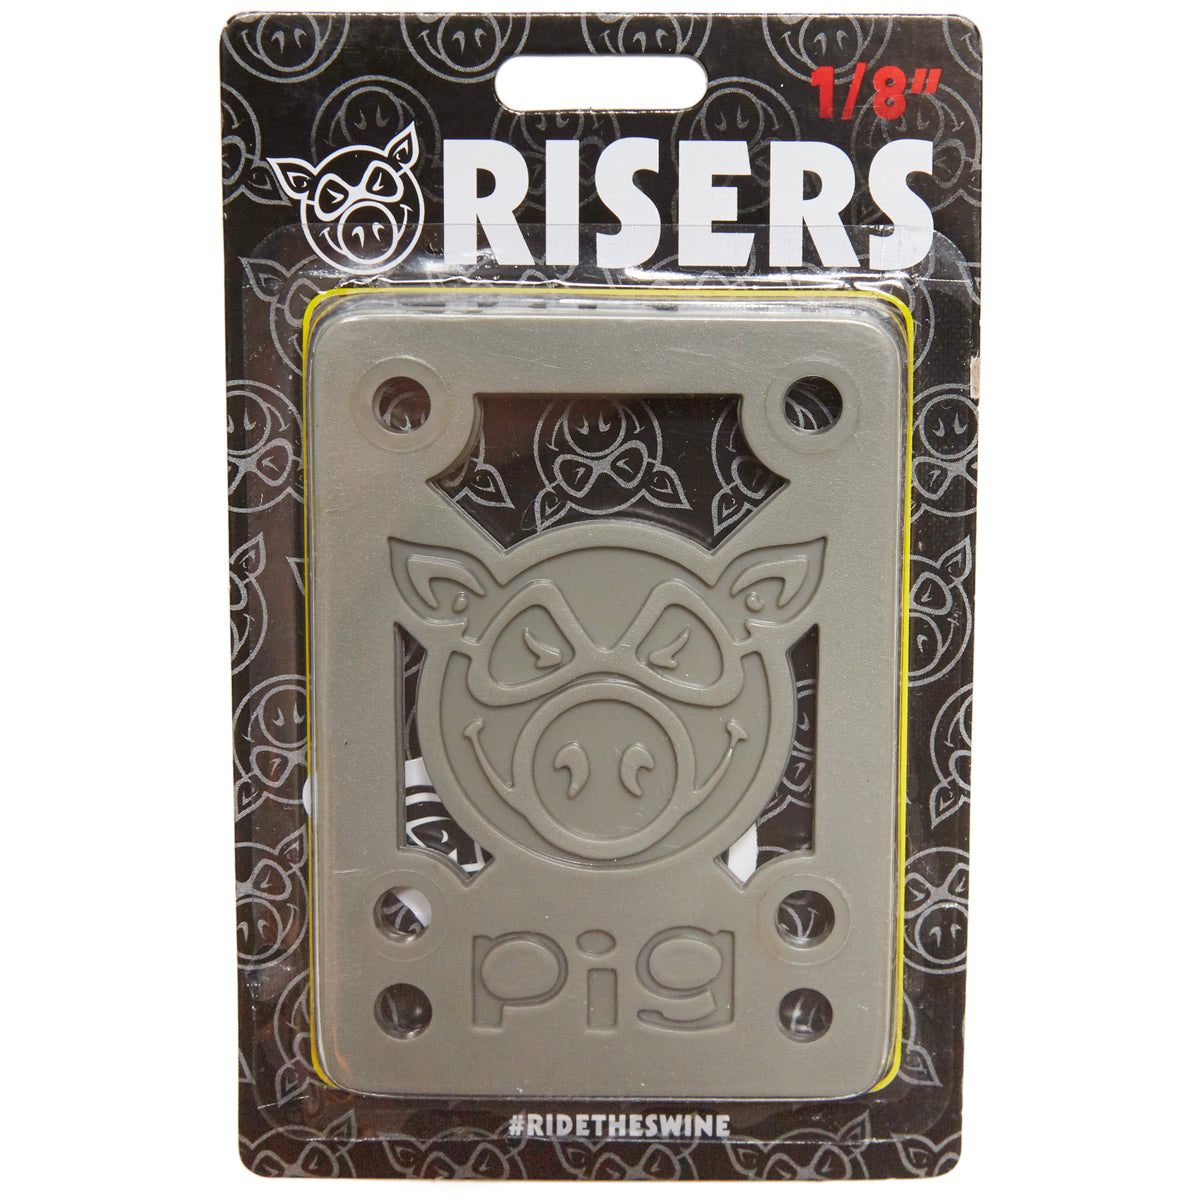 Pig Piles Hard Risers & Shock Pads - Grey image 1